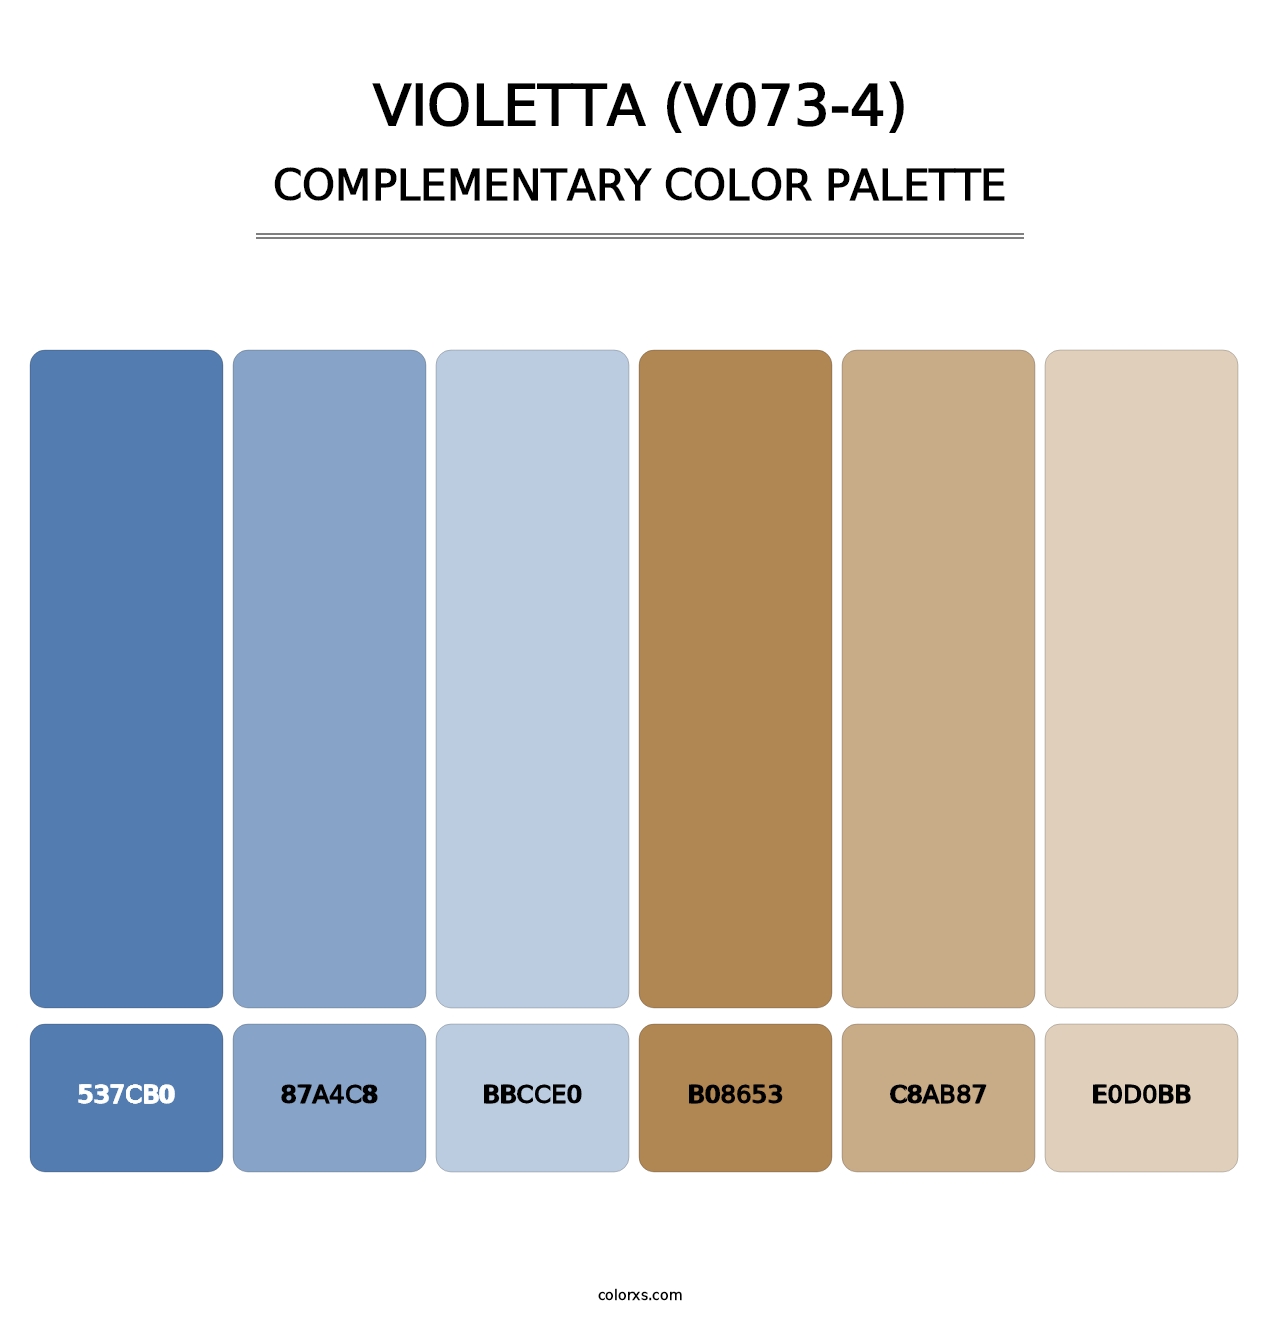 Violetta (V073-4) - Complementary Color Palette